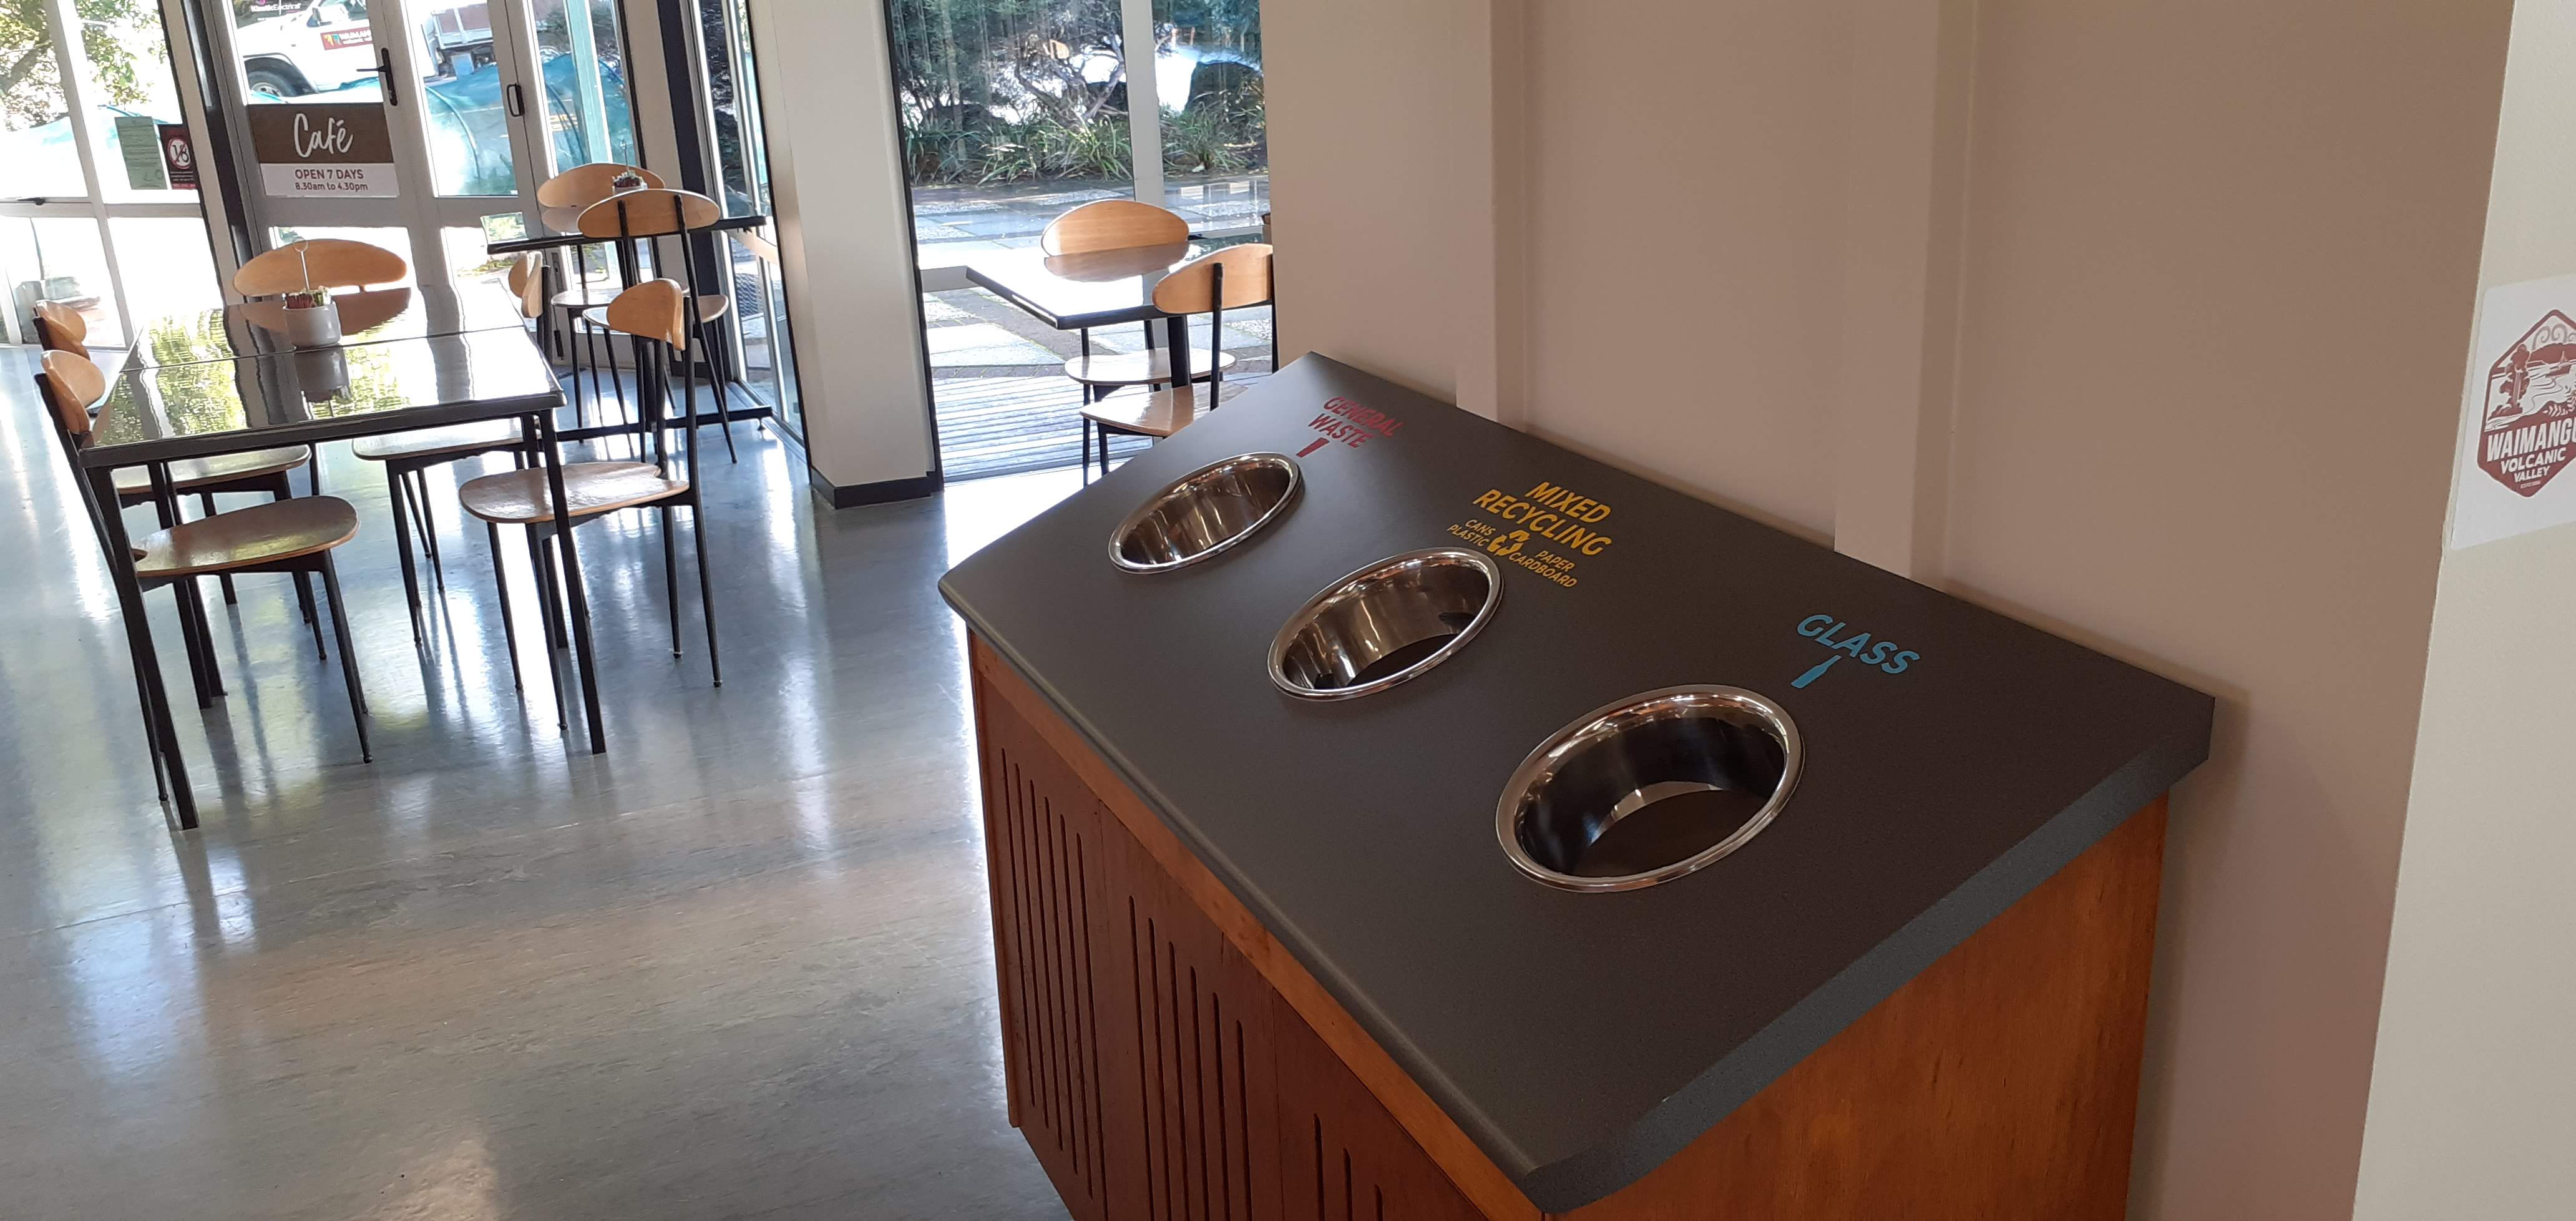 Recycling at Waimangu Cafe - Sustainability commitment